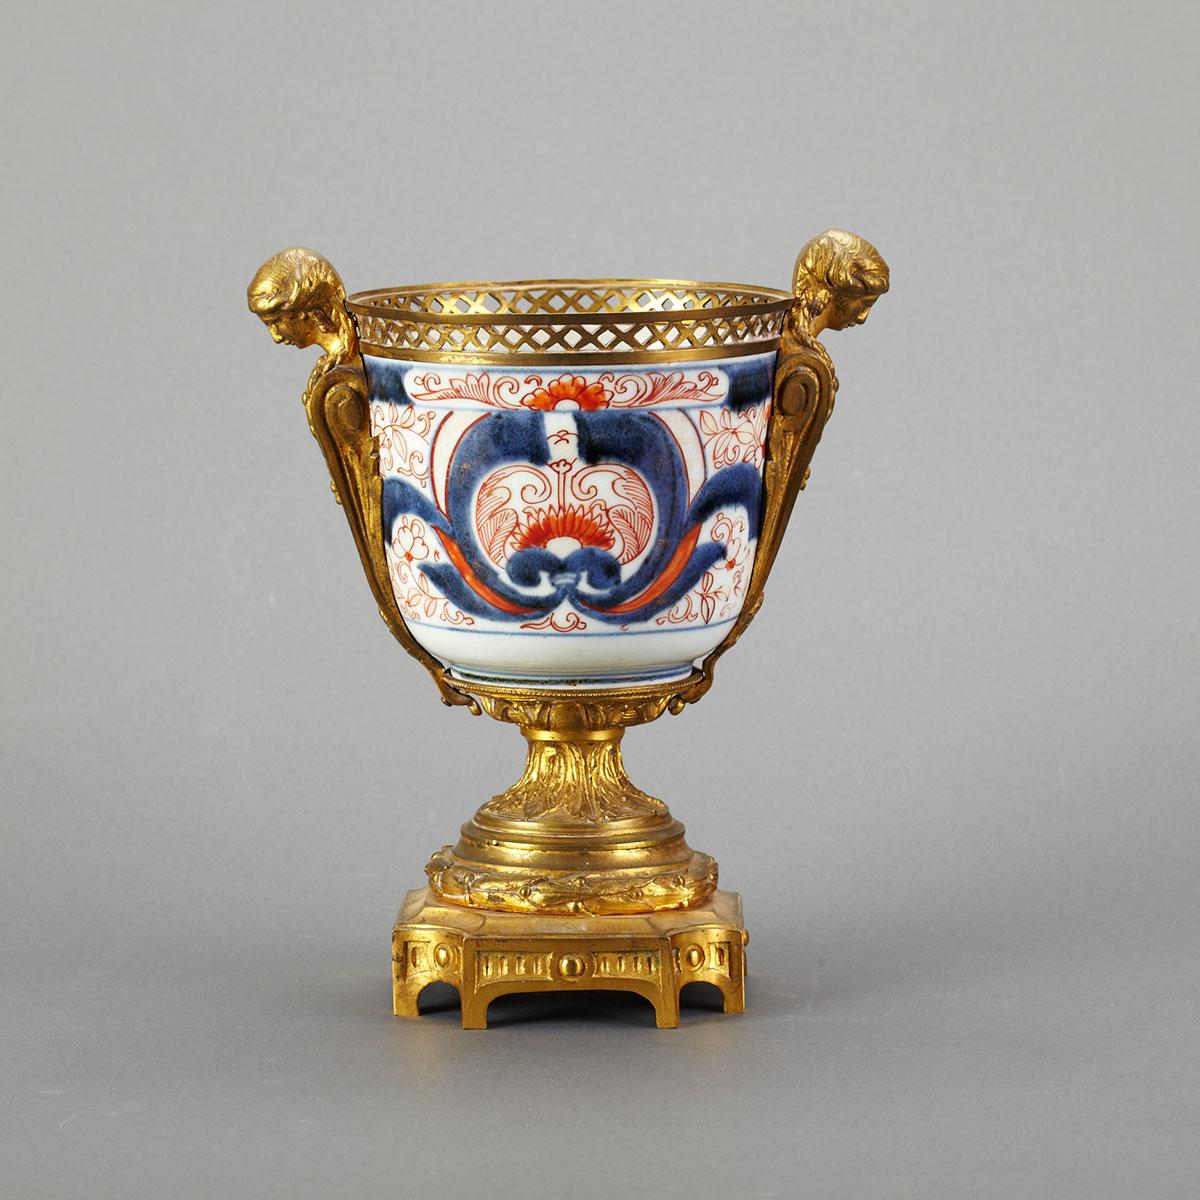 French Ormolu Mounted Chinese Imari Porcelain Urn, late 18th/19th century